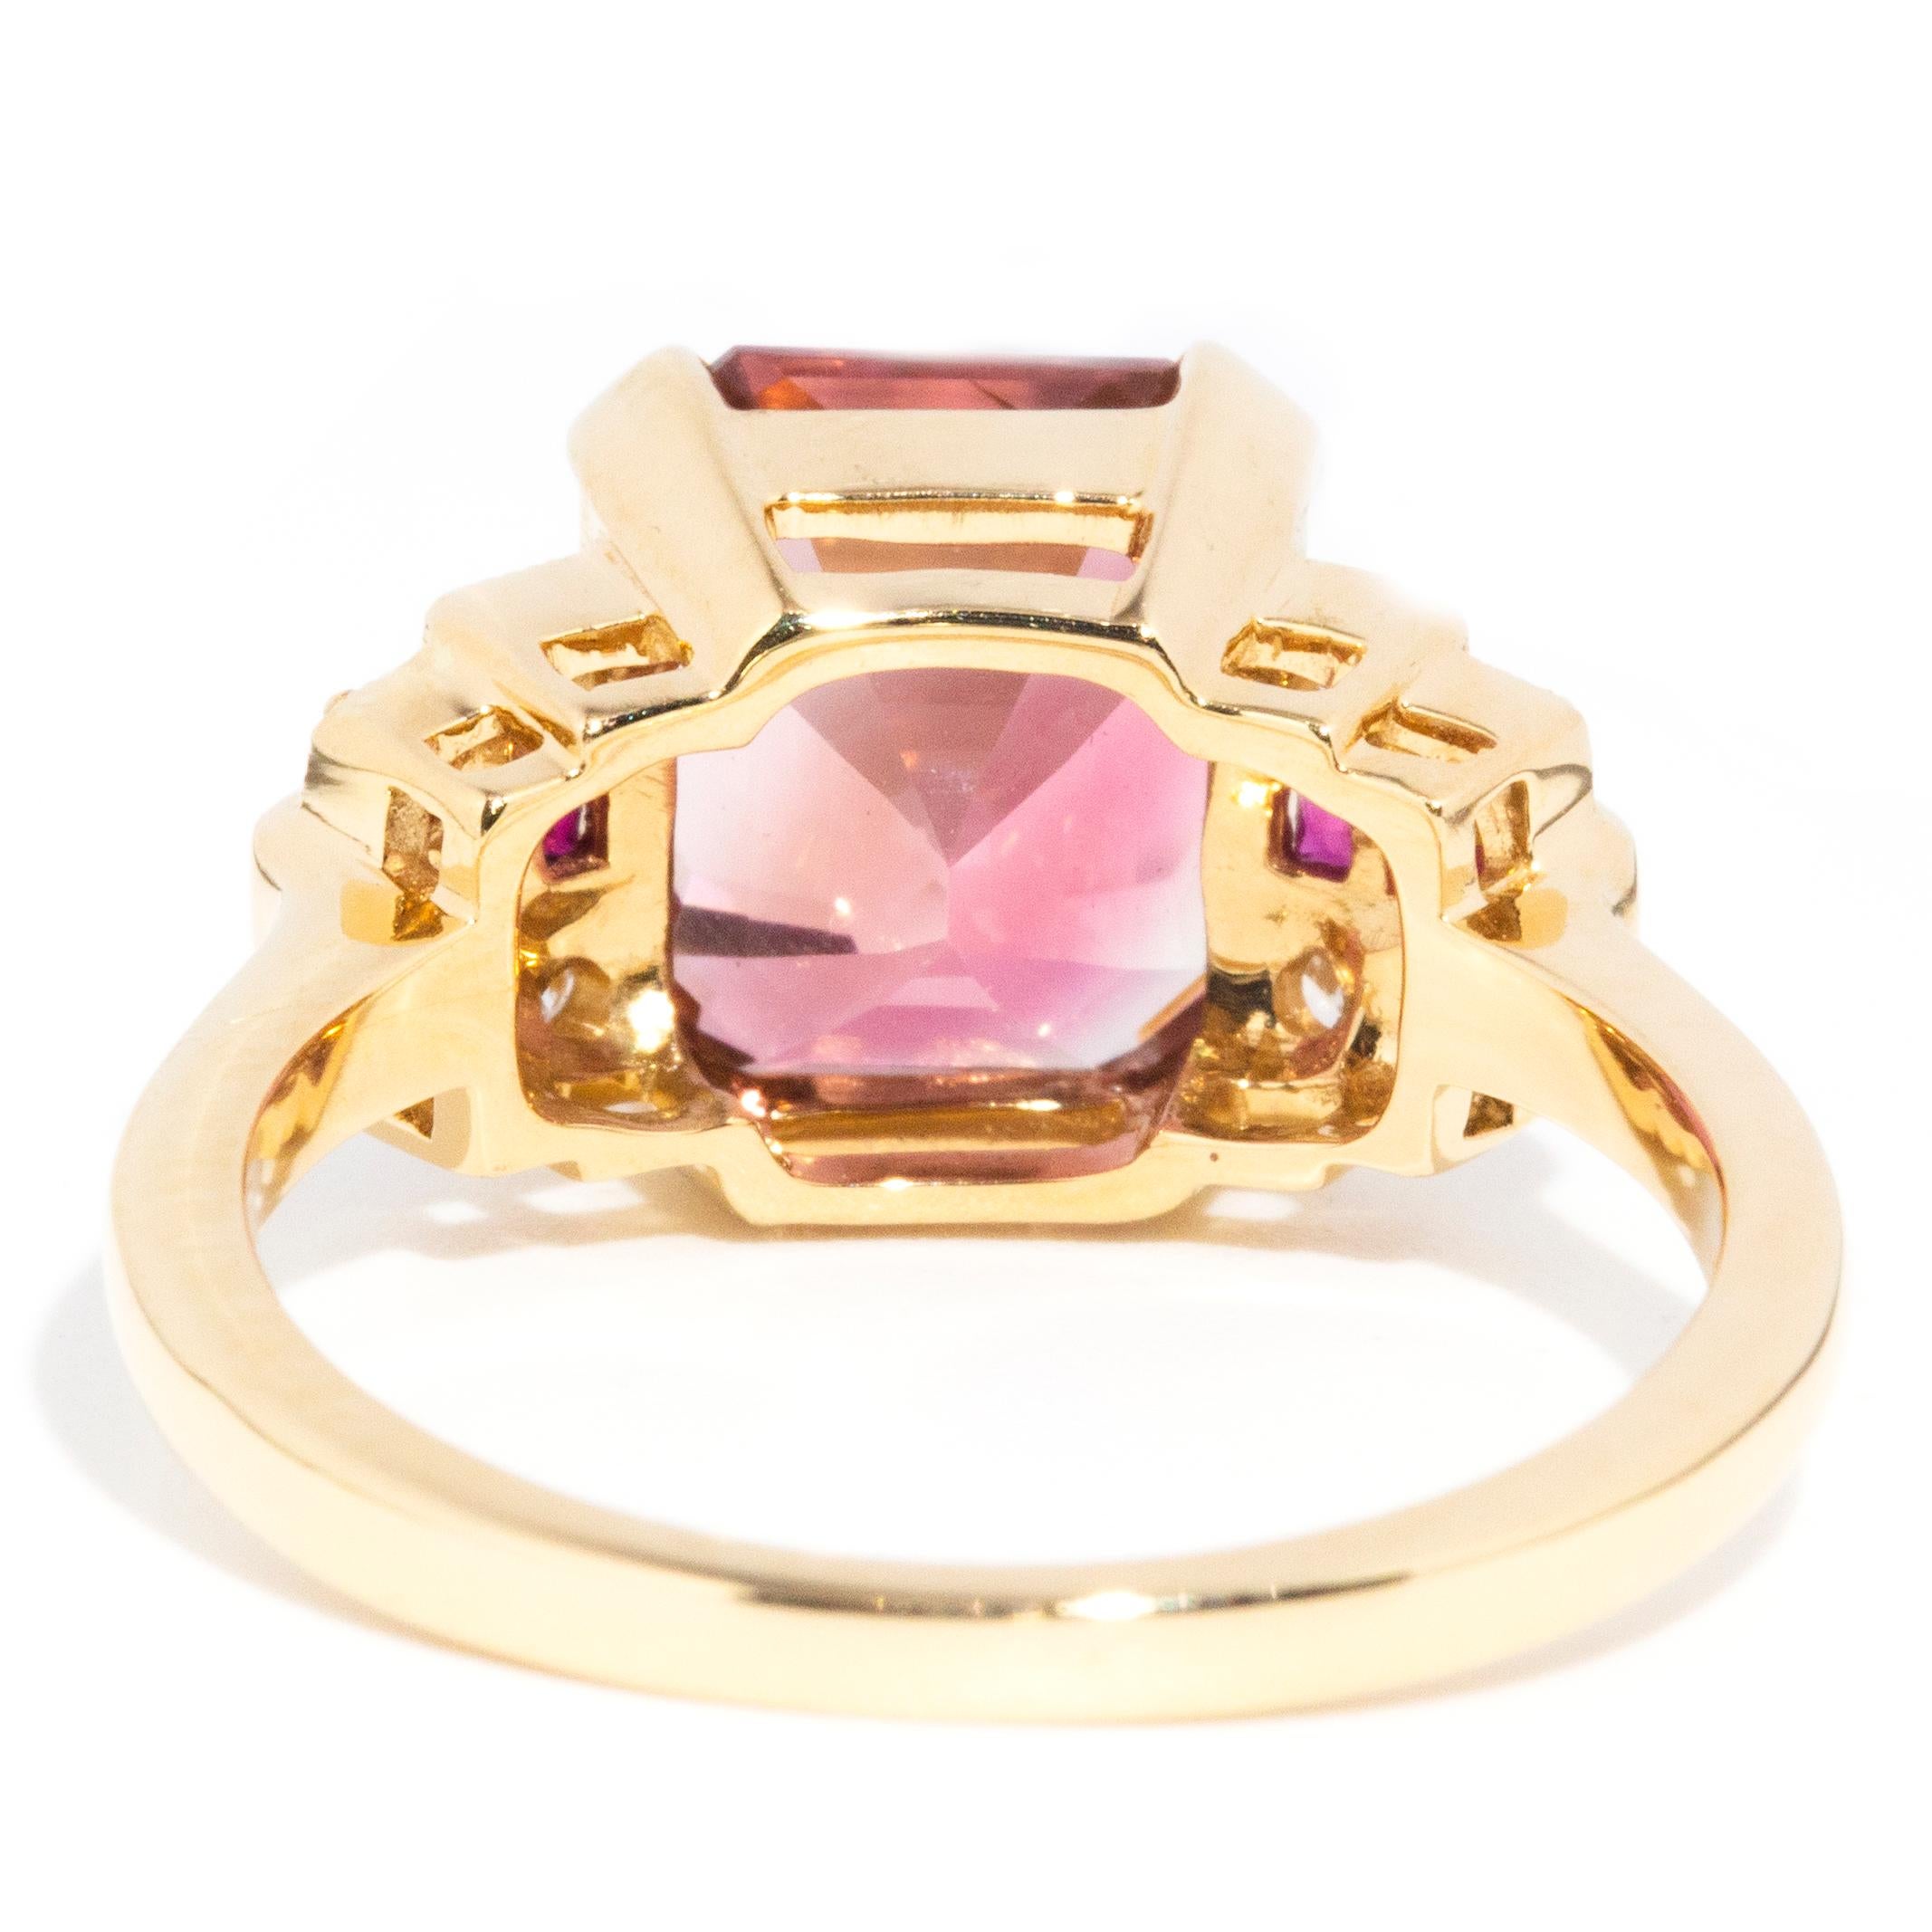 4.21 Carat Bright Pink Tourmaline Ruby and Diamond 18 Carat Yellow Gold Ring 5